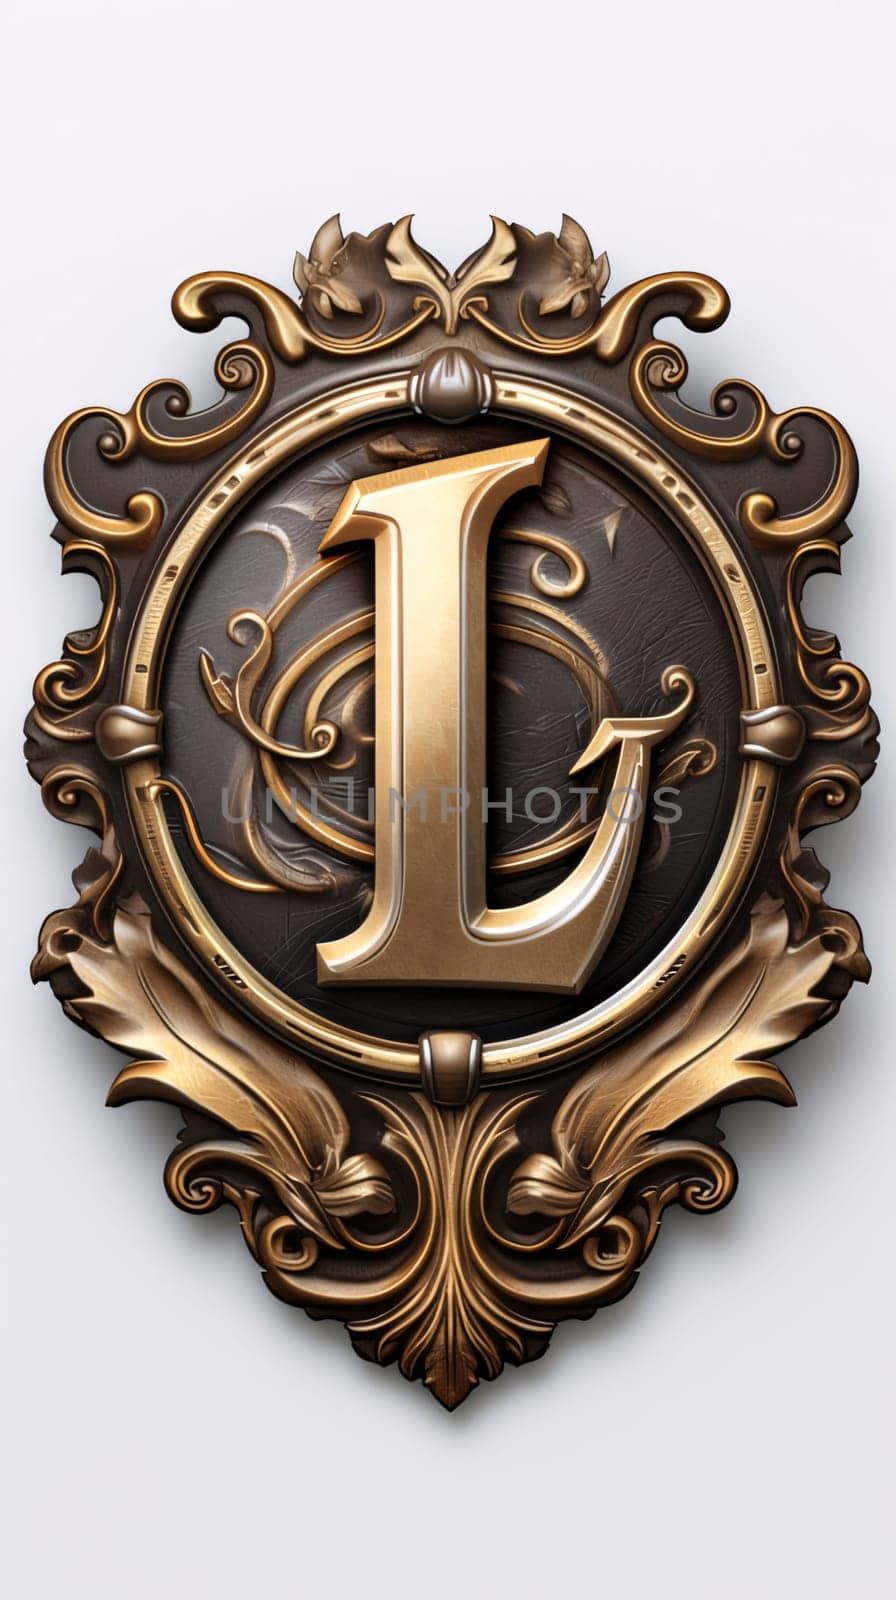 Graphic alphabet letters: Luxury golden letter L in vintage frame on white background.